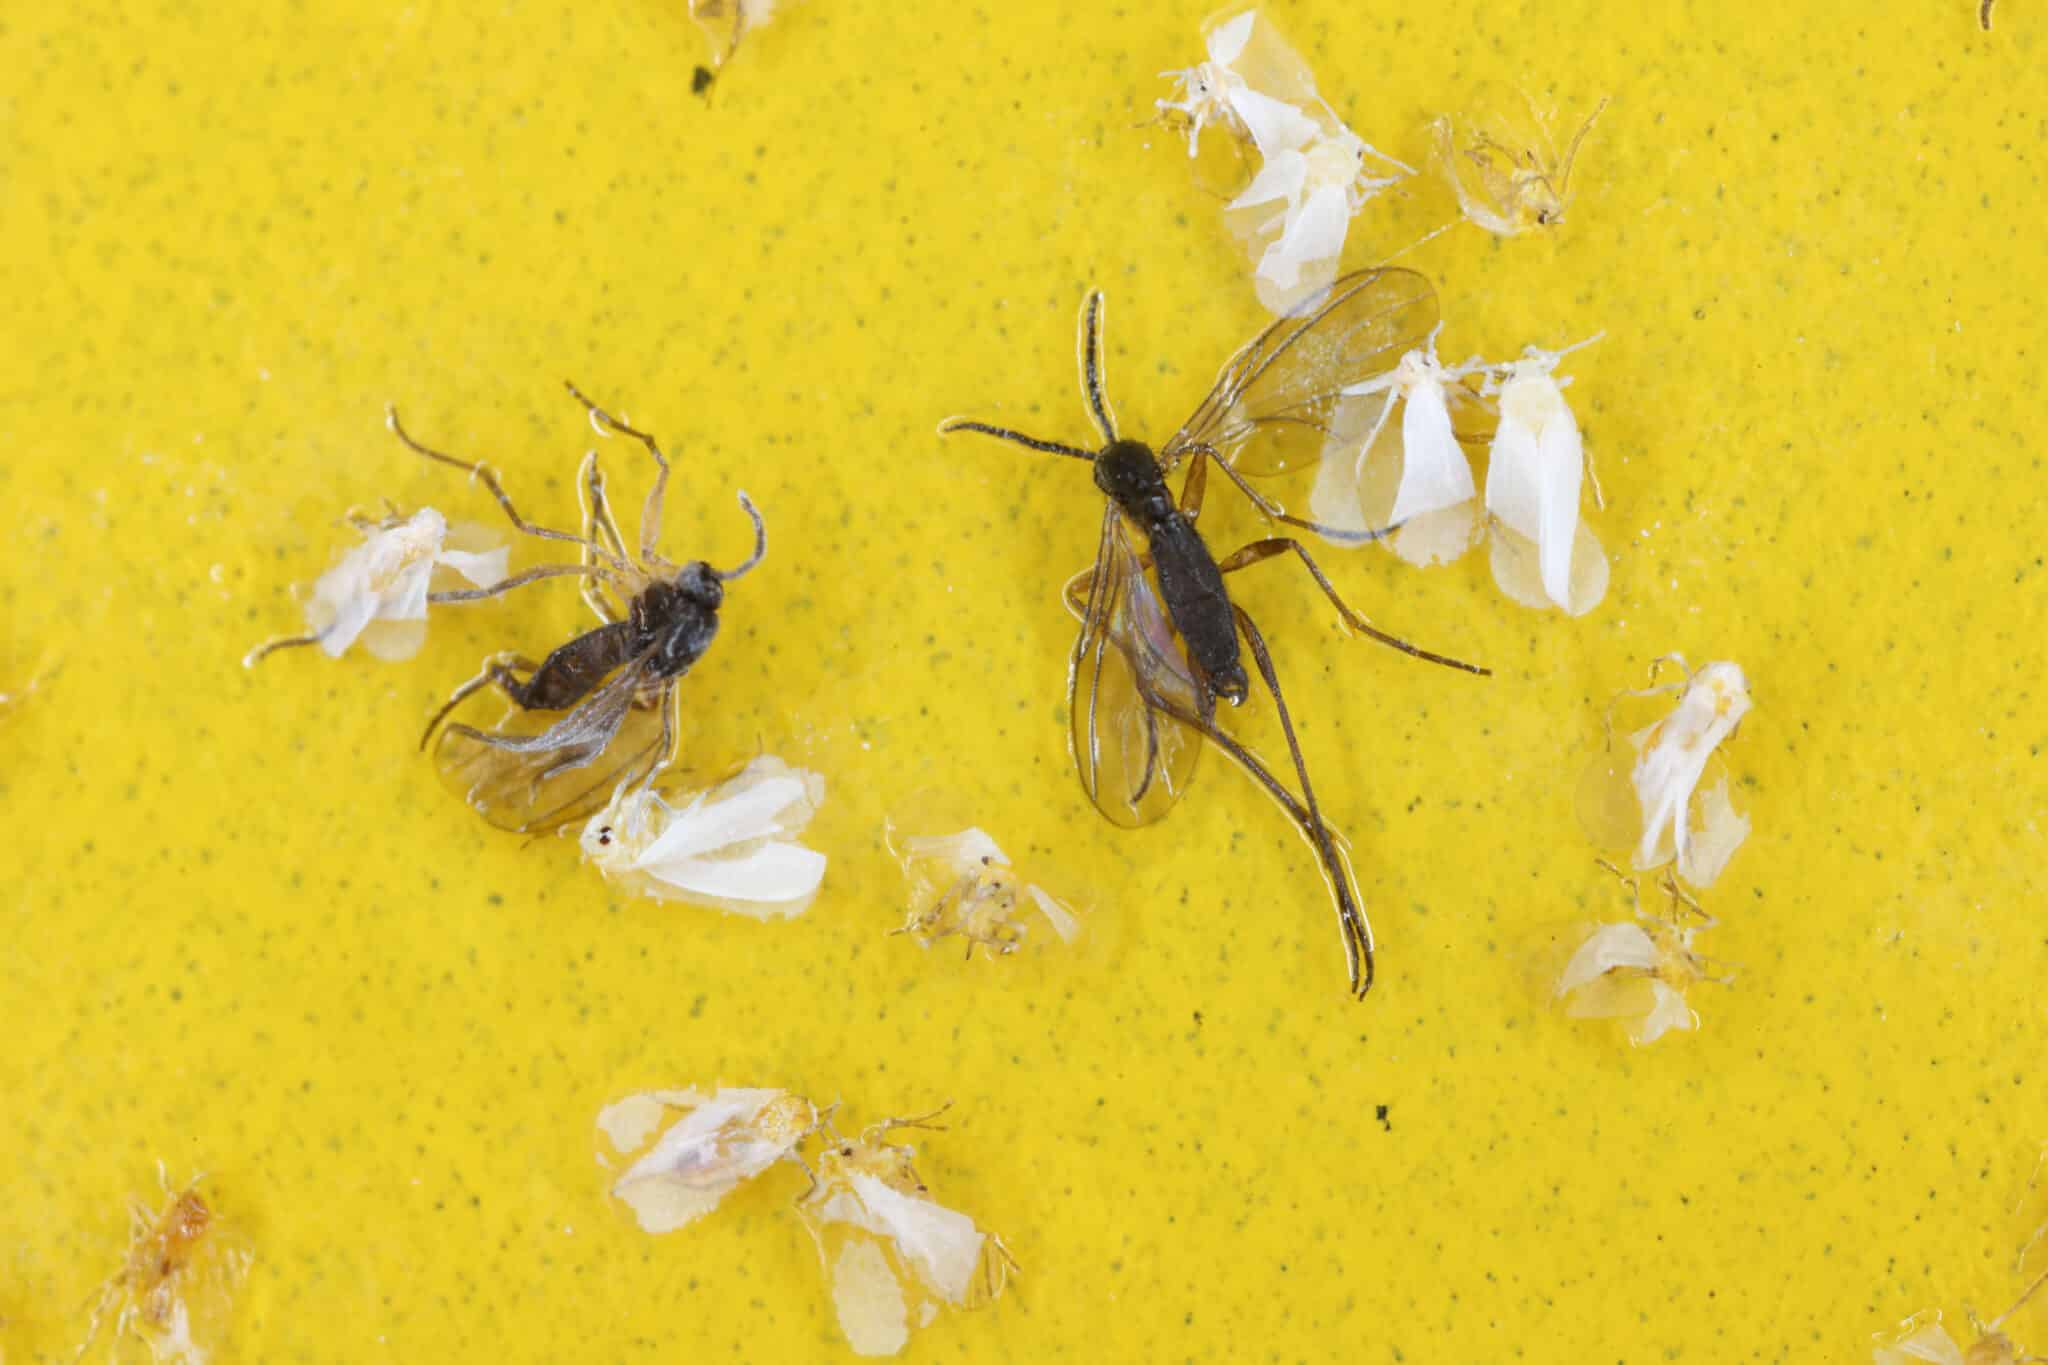 DIY No Kill Mouse Traps - Arrow Termite & Pest Control